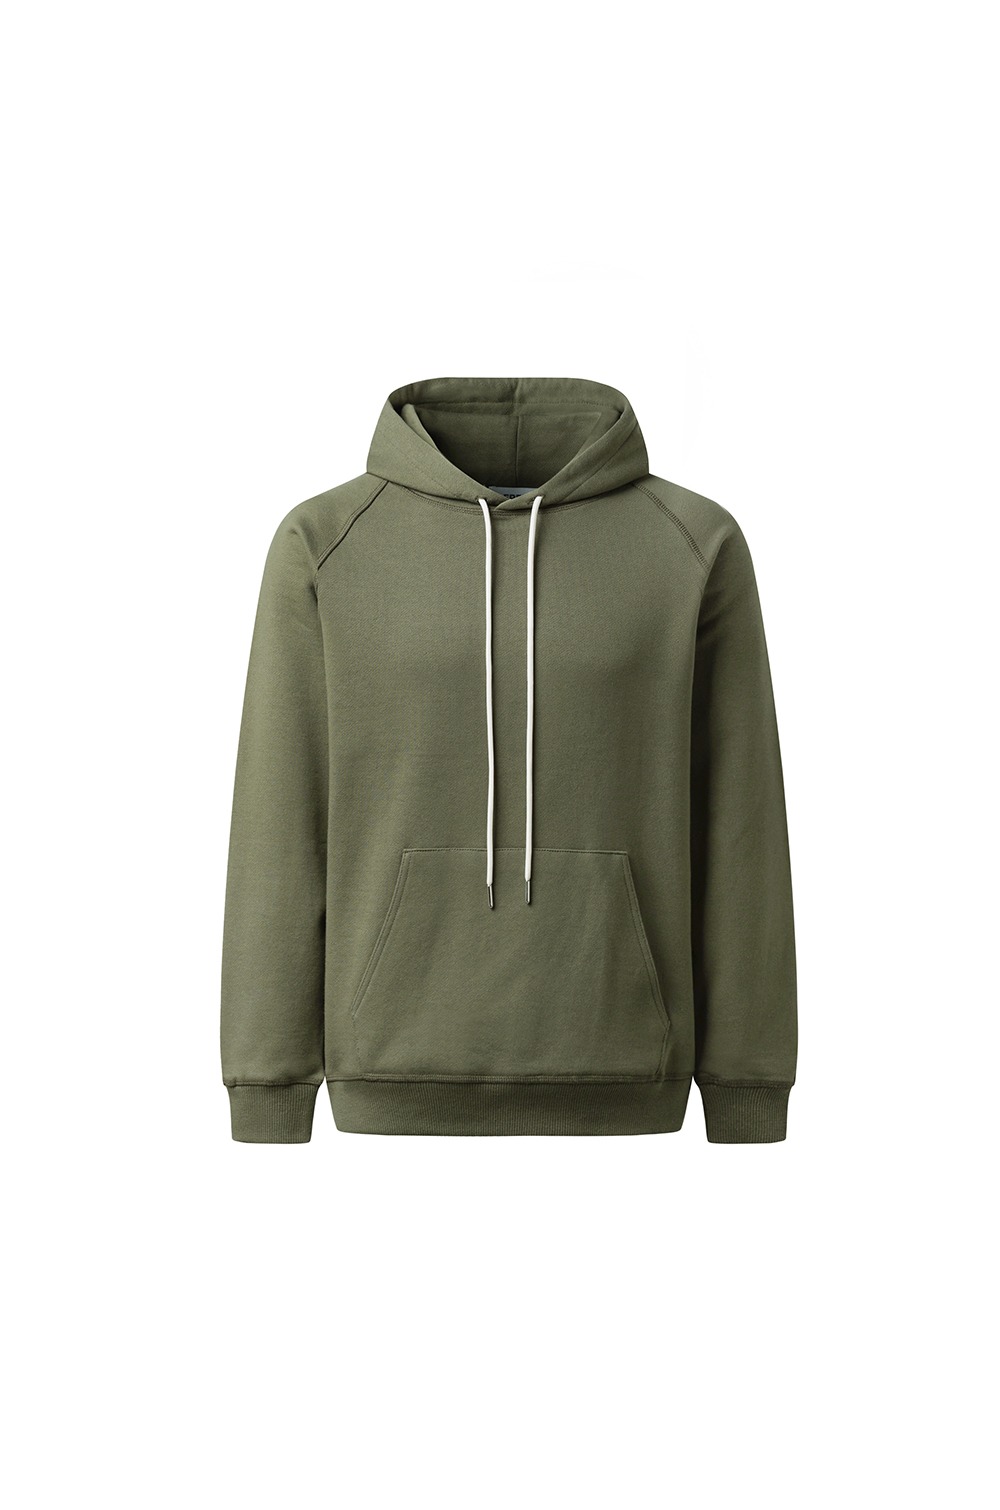 [UN] Basic hoodie - Khaki